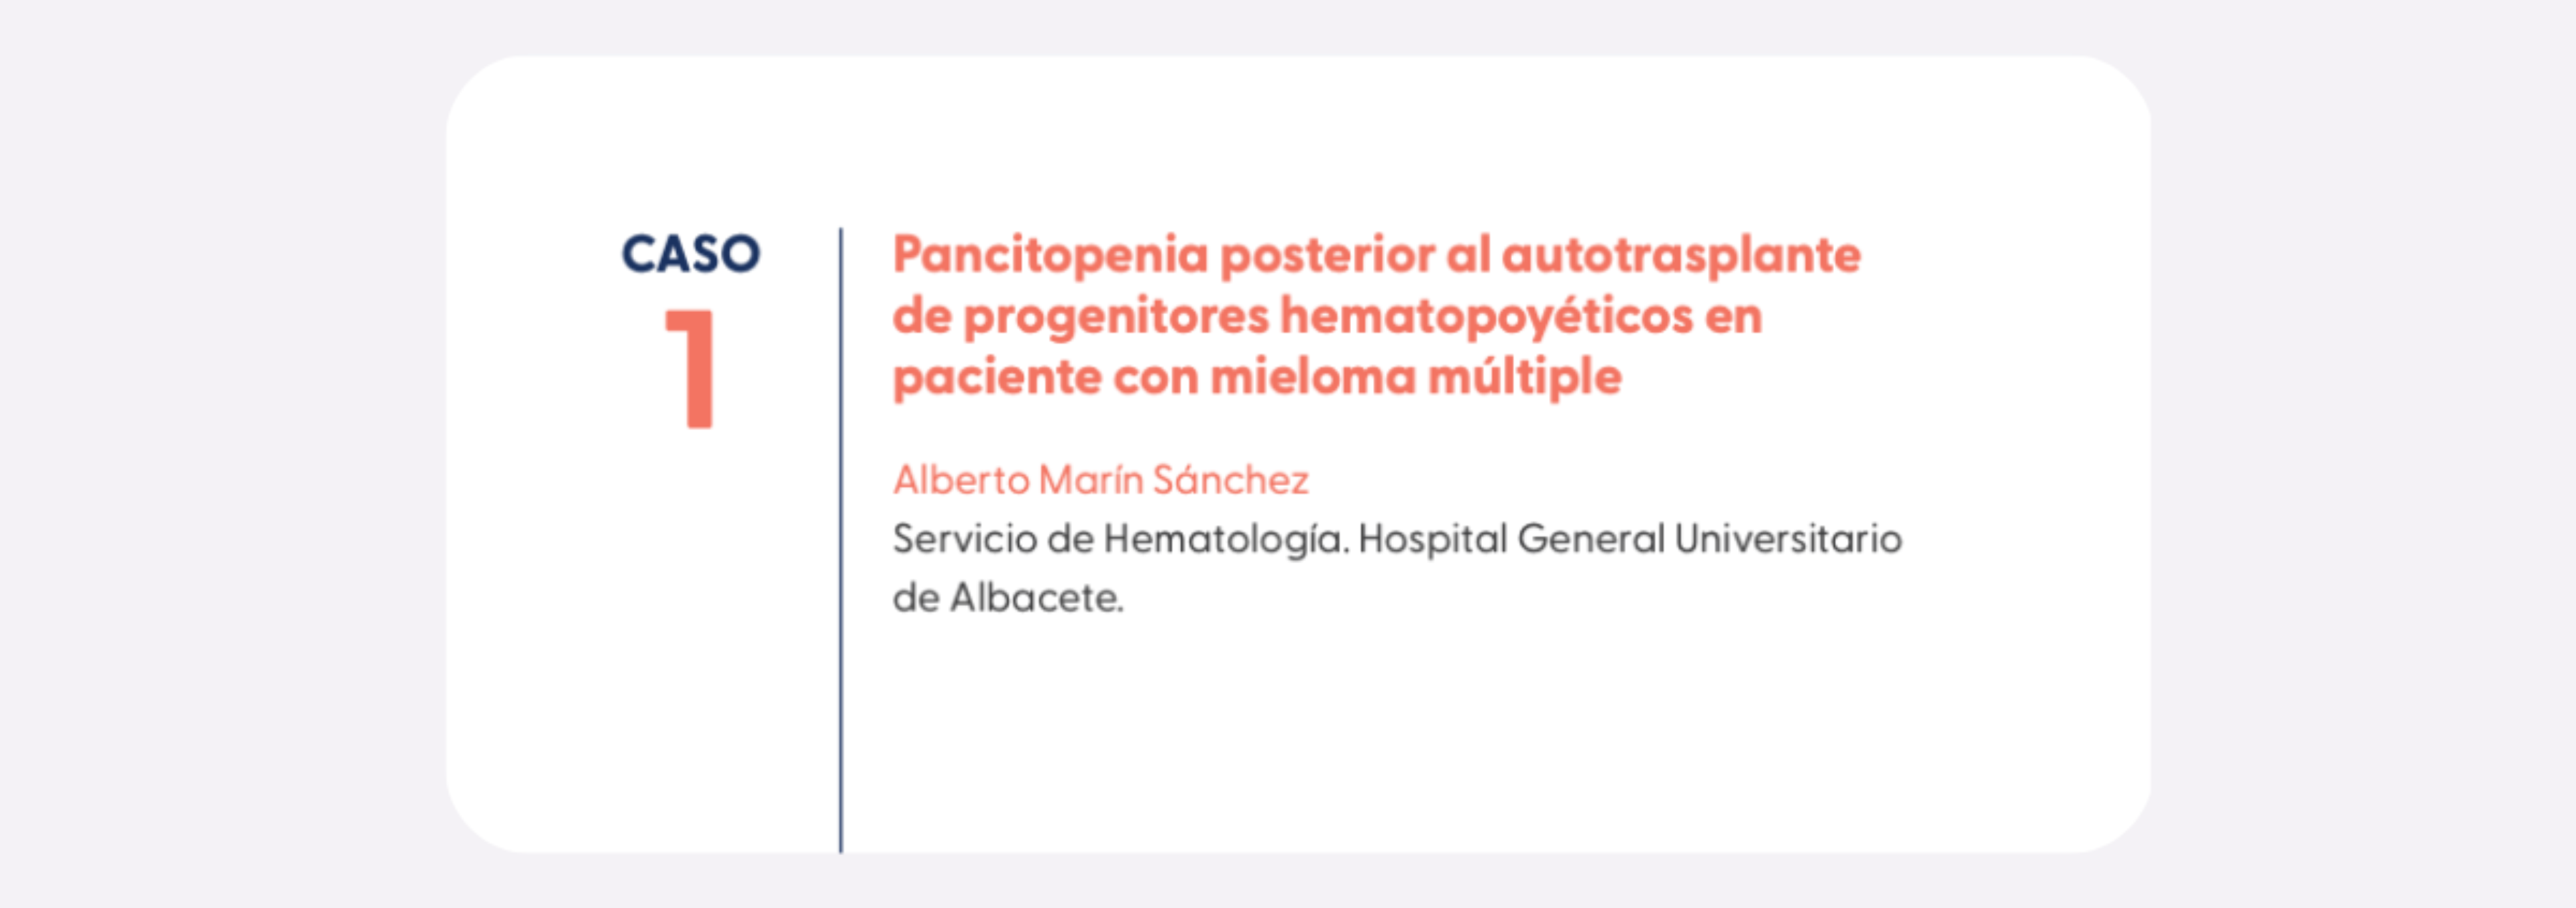 pancitopenia-posterior-autotrasplante-progenitores-hematopoyeticos-